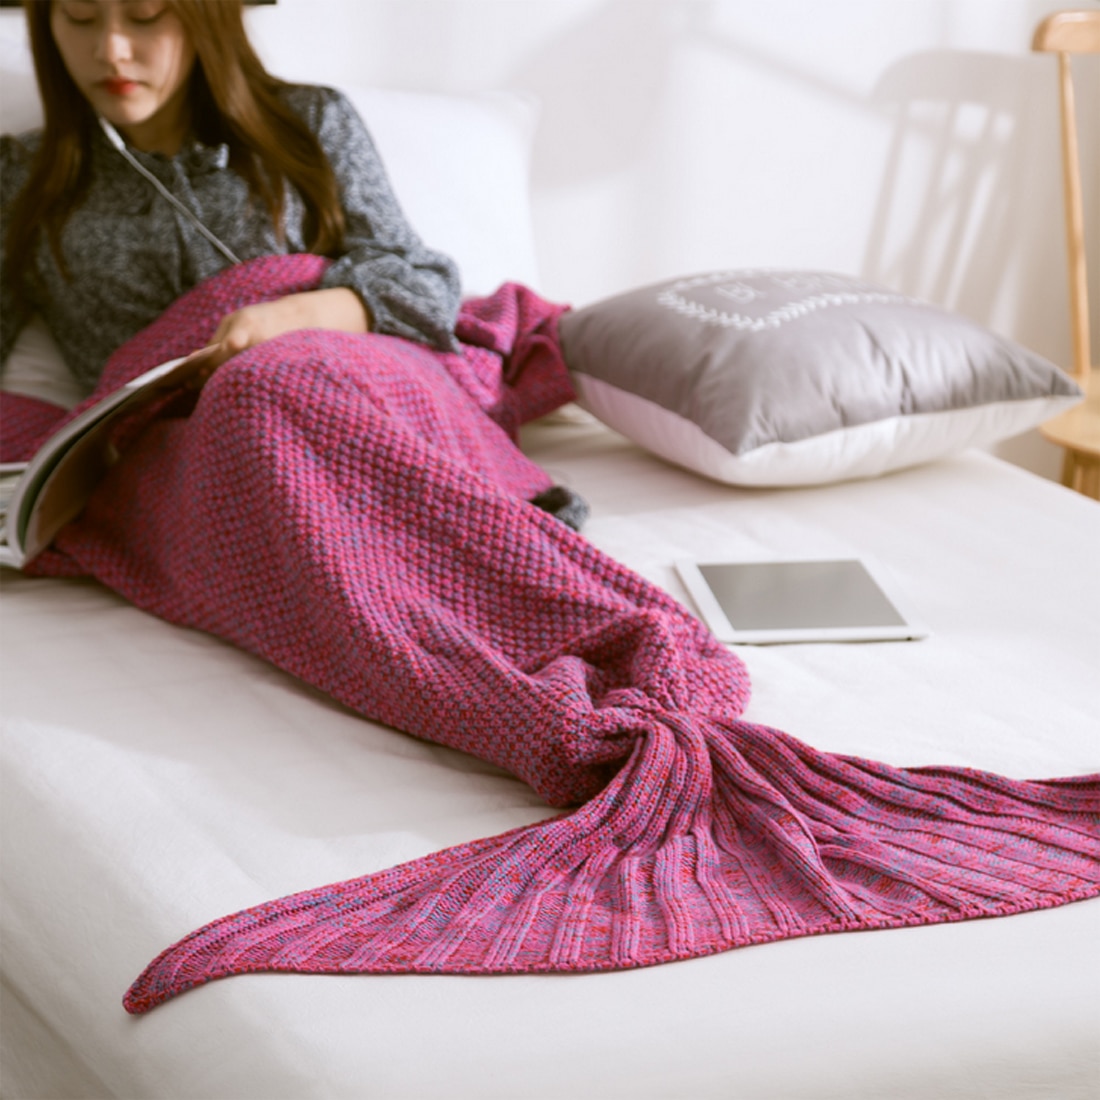 Mermaid Tail Blanket Handmade Knitted Sleeping Bag For Home TV Sofa Bed Mermaid Tail Blanket sute for Kids Adult Baby